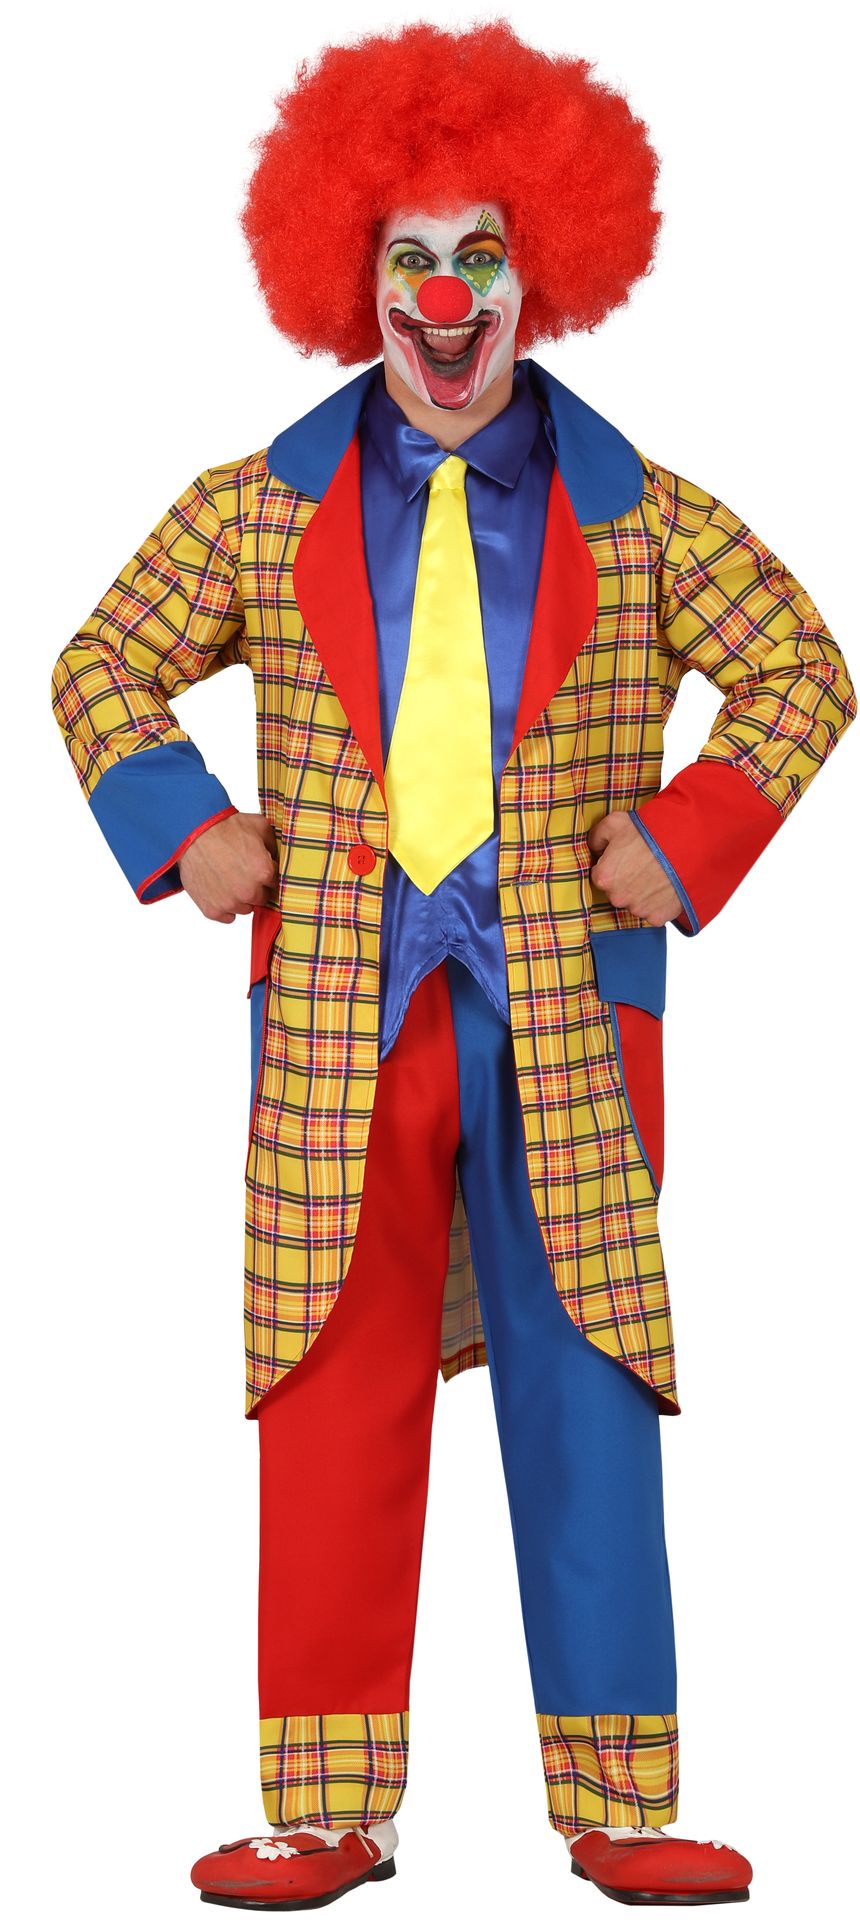 Slipjas clown outfit mannen